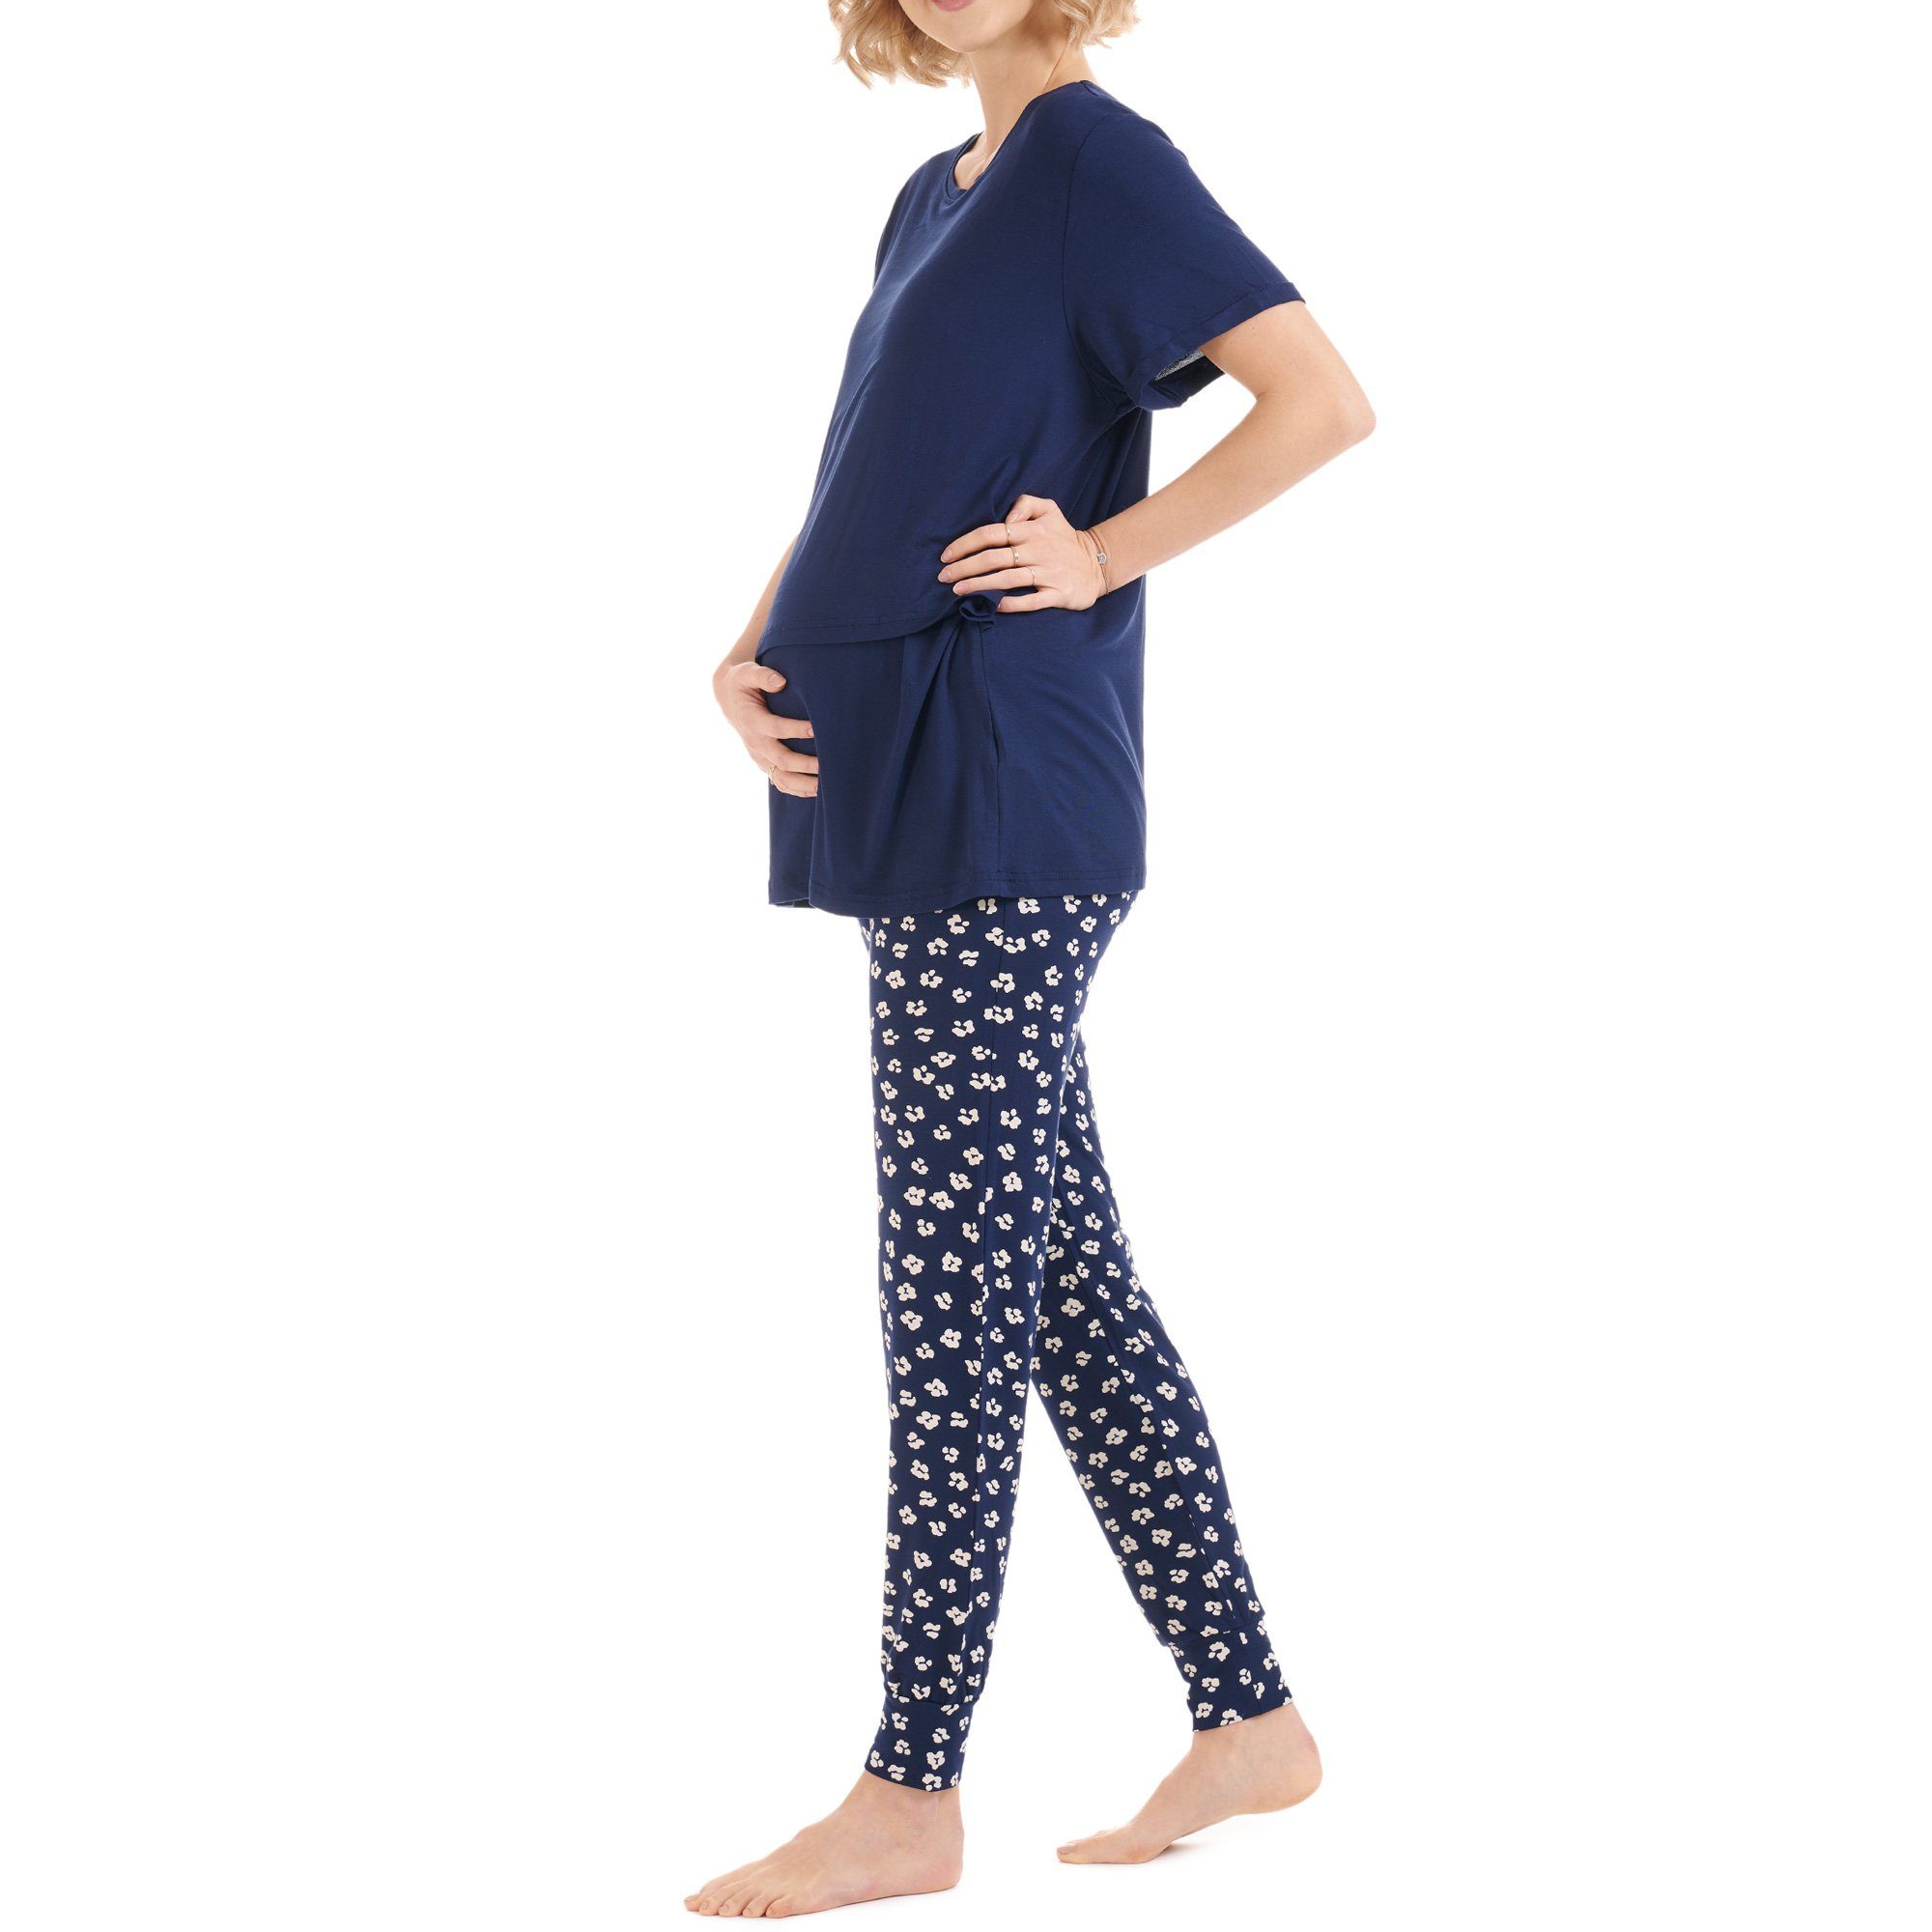 tlg) (2 Pyjama-Set Stillpyjama Stillmode - Umstandspyjama - Muster - Herzmutter Blau/Blumen